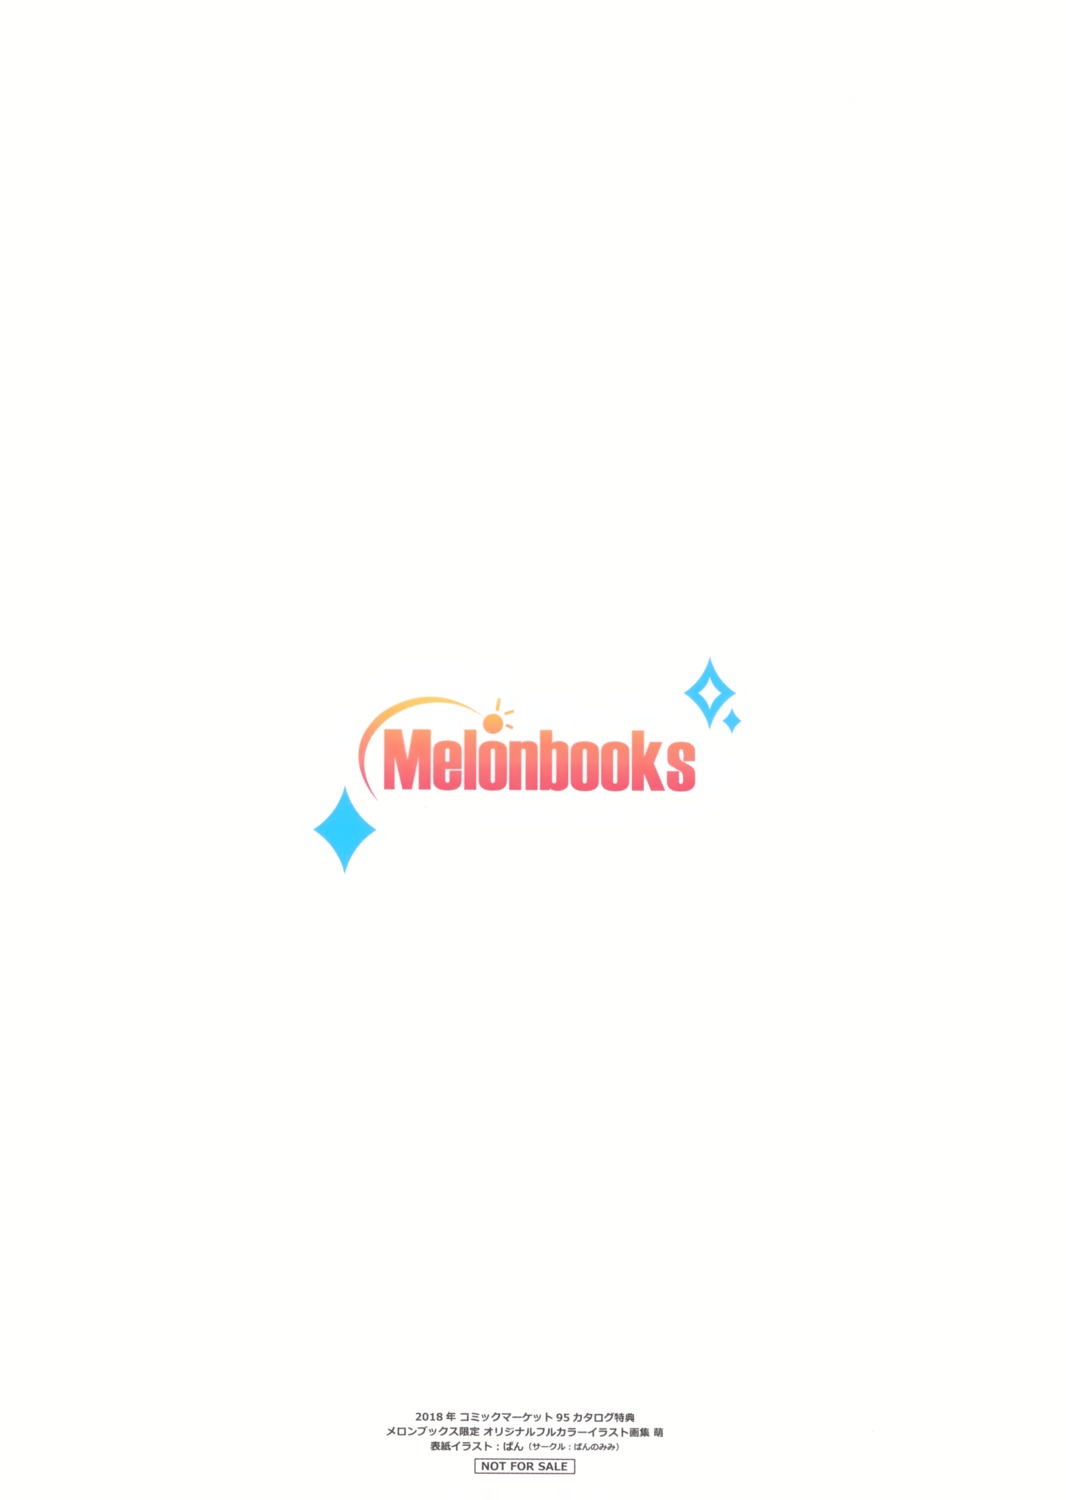 melonbooks text